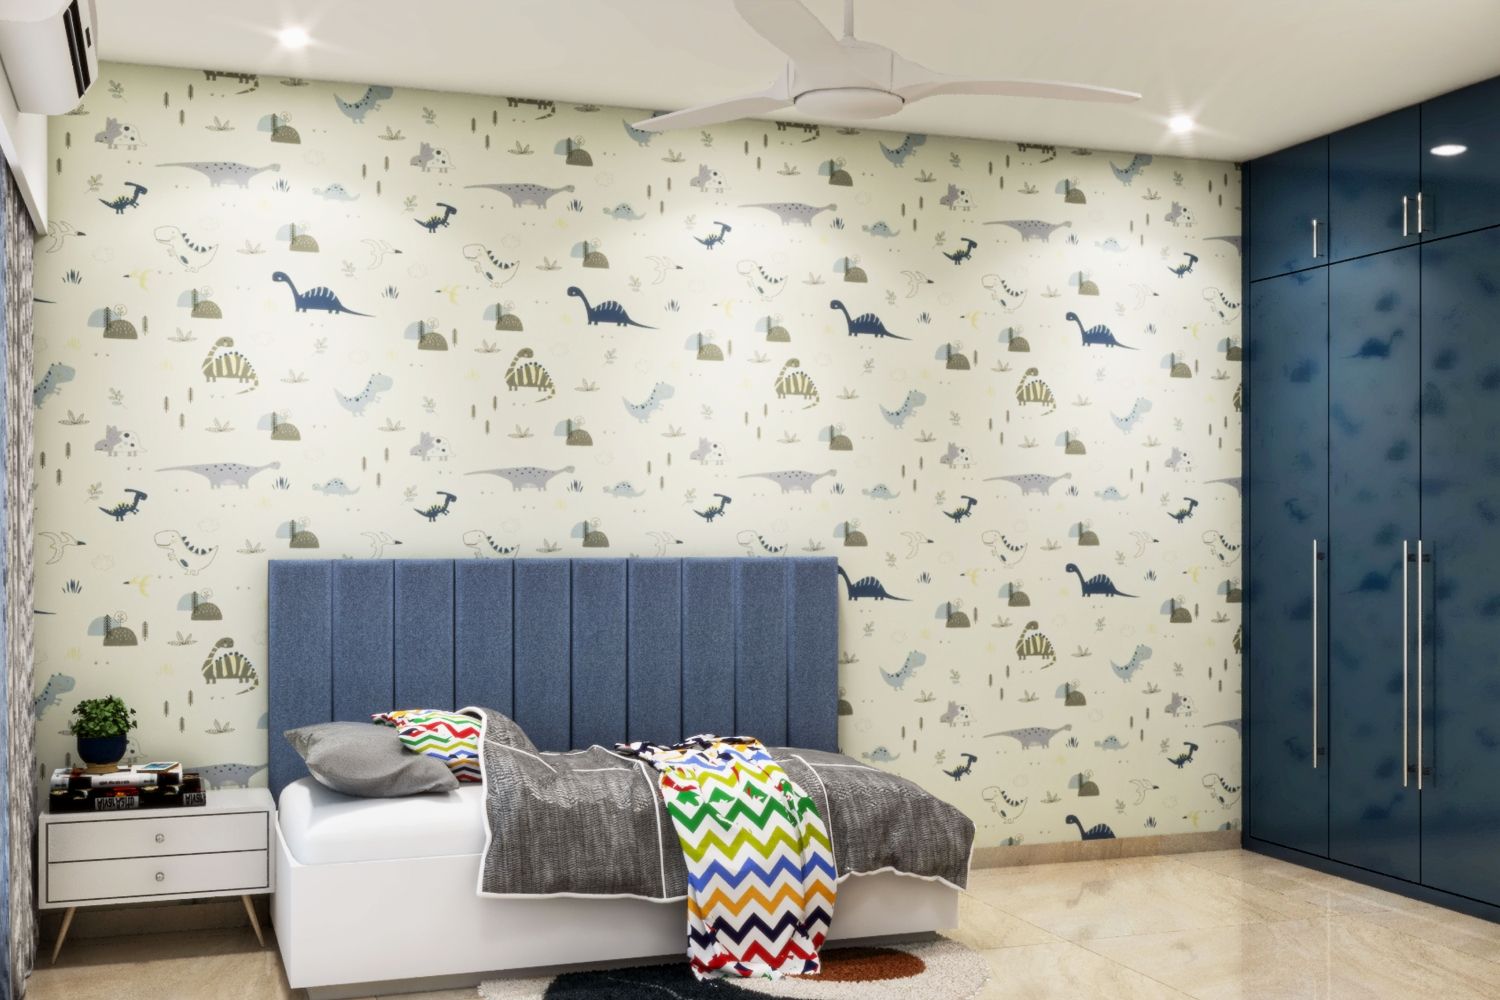 Art Deco Boys Room Design With Dinosaur-Themed Wallpaper